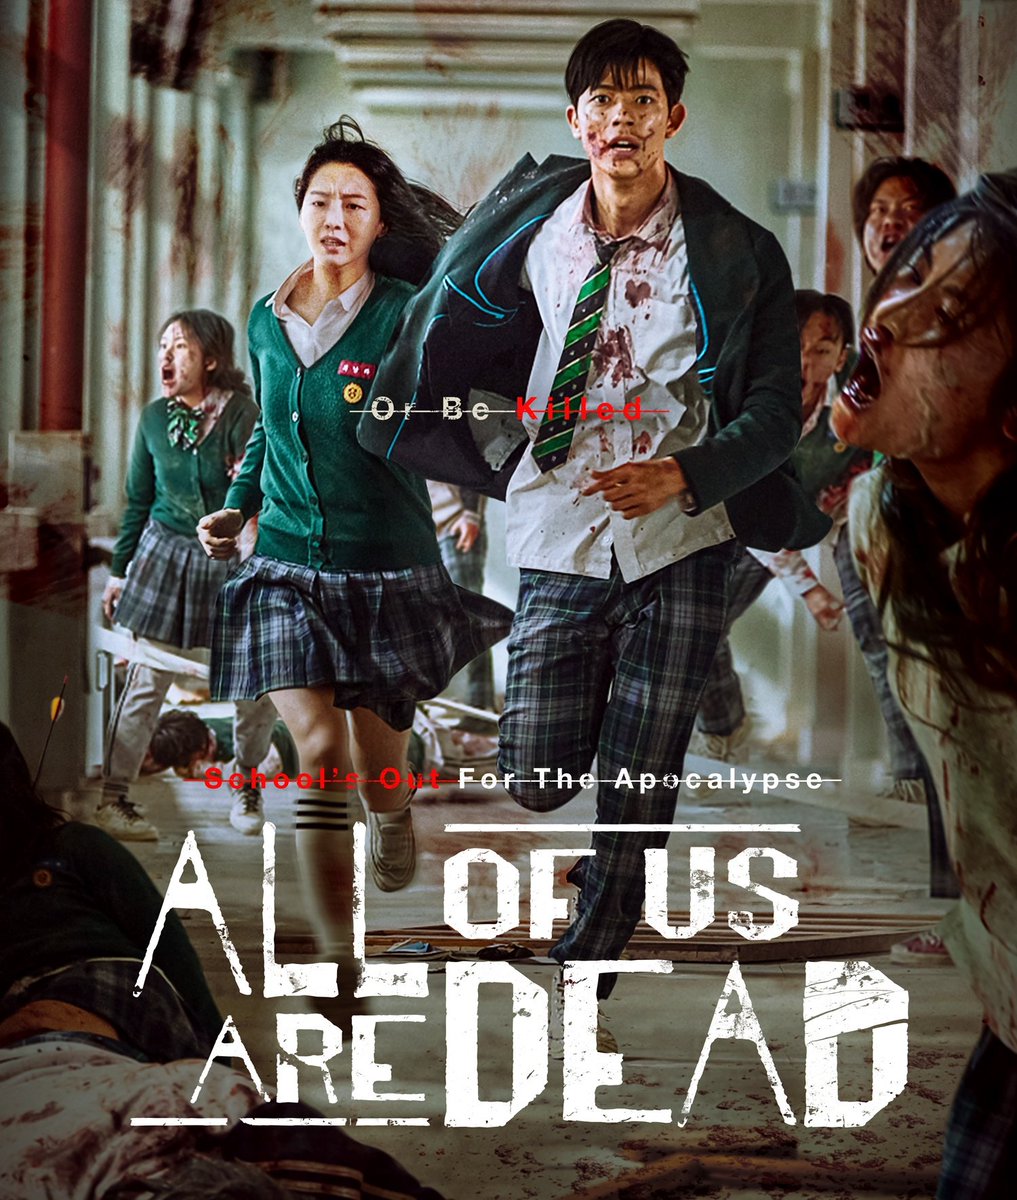 All of Us Are Dead  Série coreana de zumbis na Netflix promete